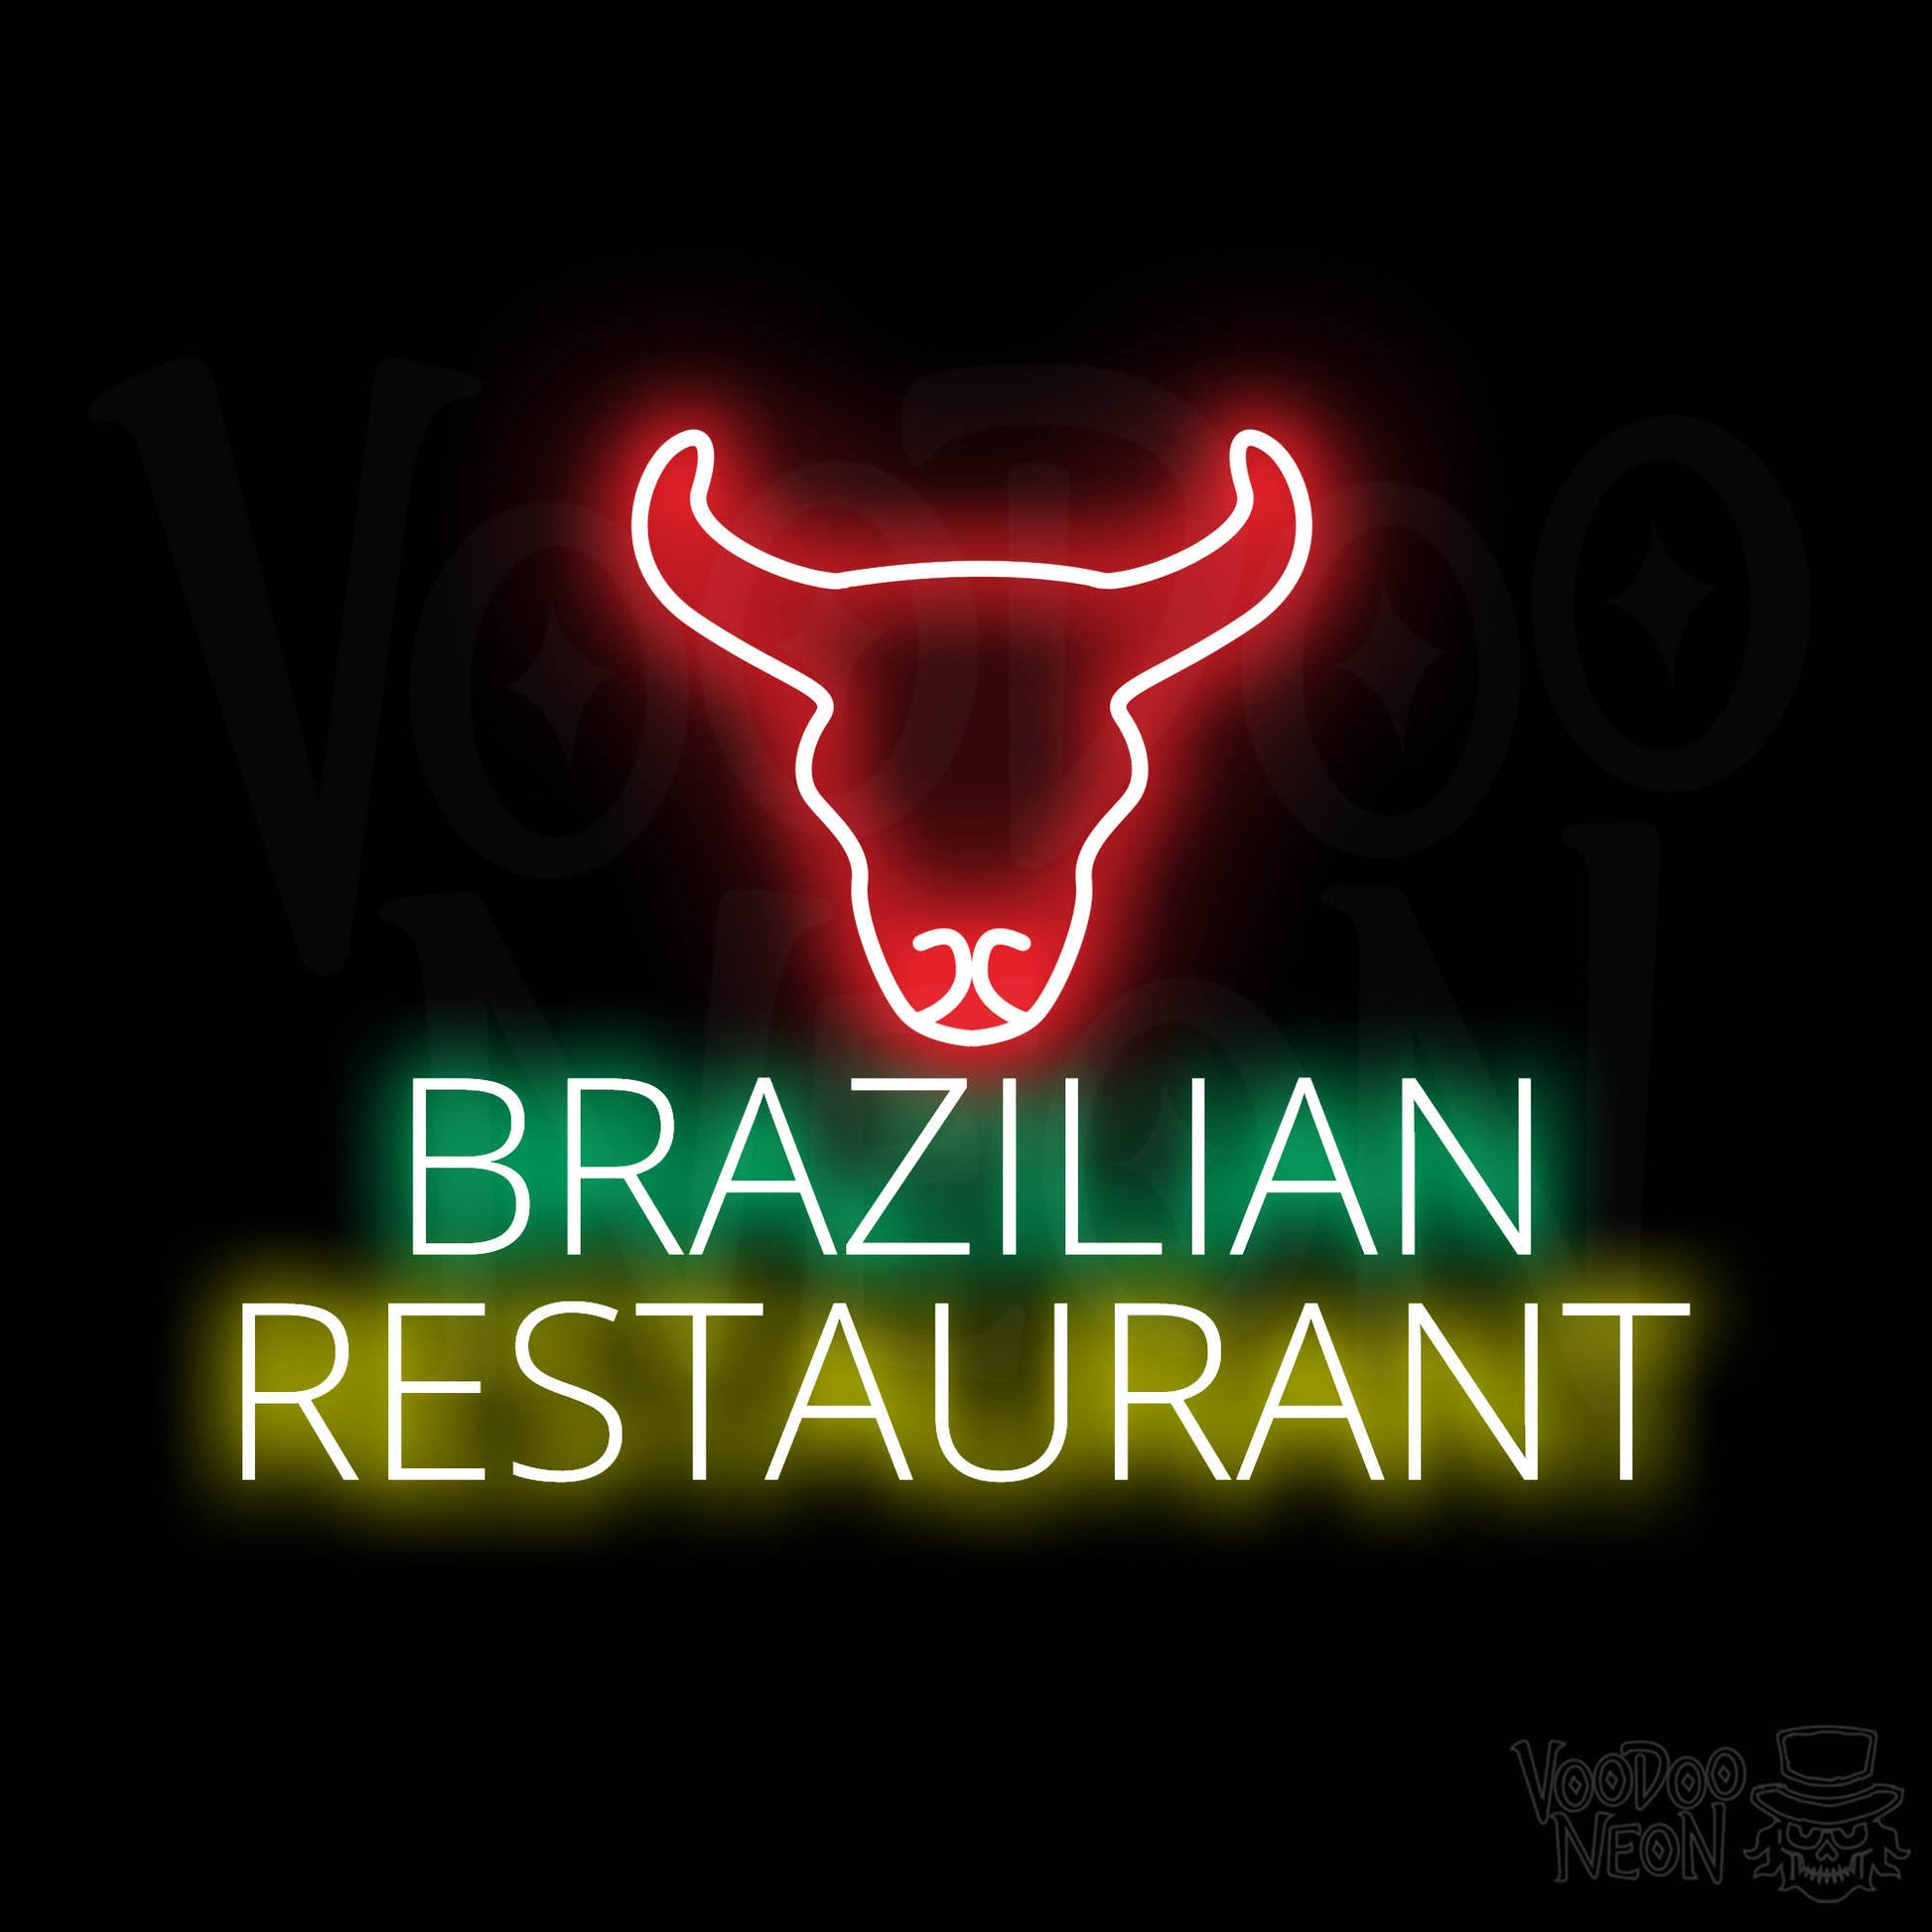 Brazilian Restaurant LED Neon - Multi-Color